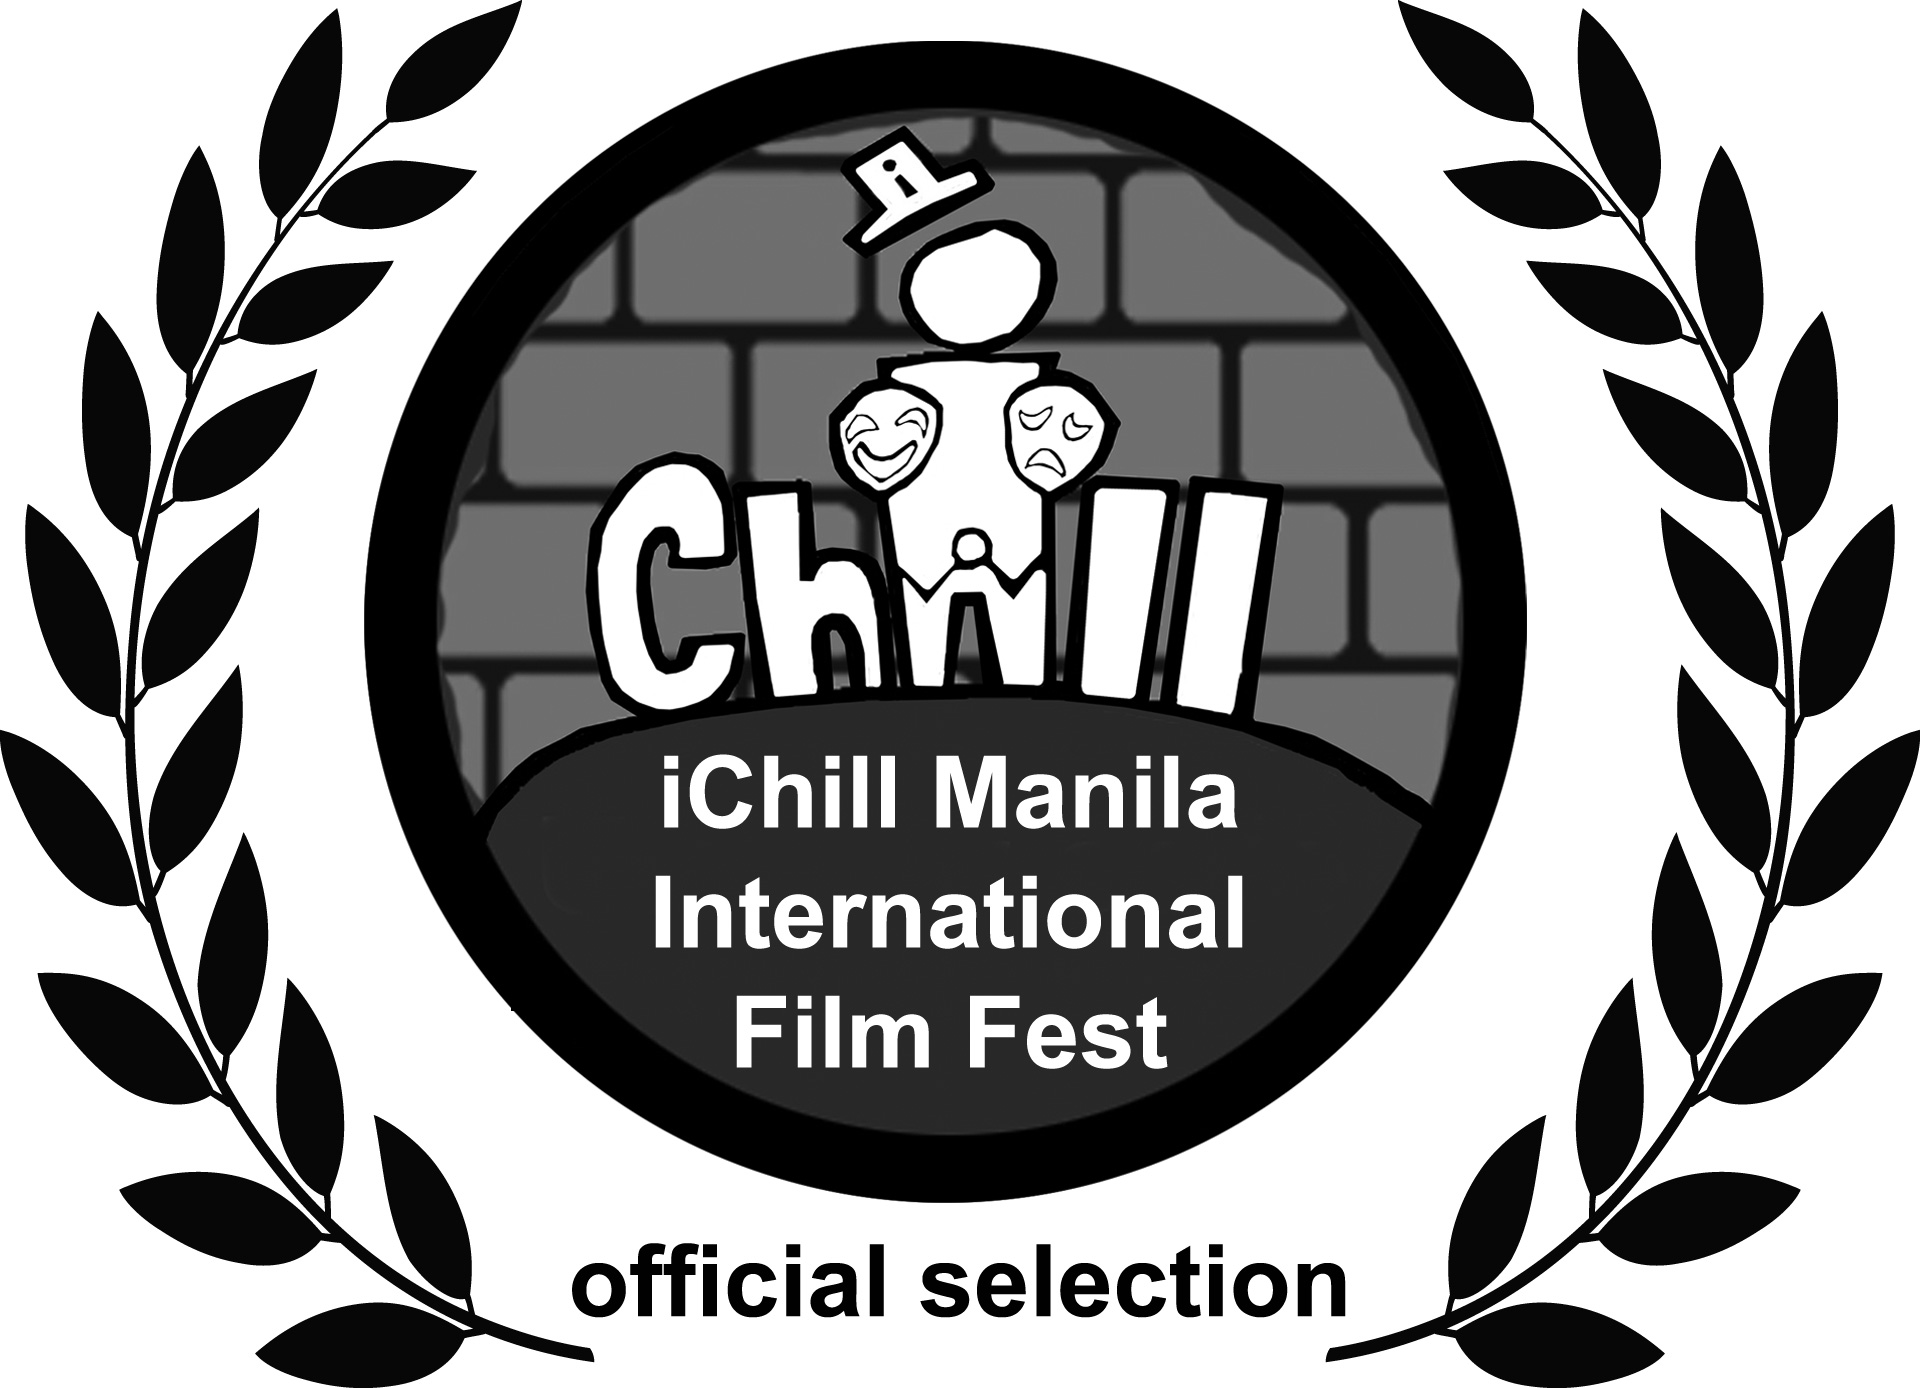 Schedule for films of January 2017 iChill Manila International Film Fest